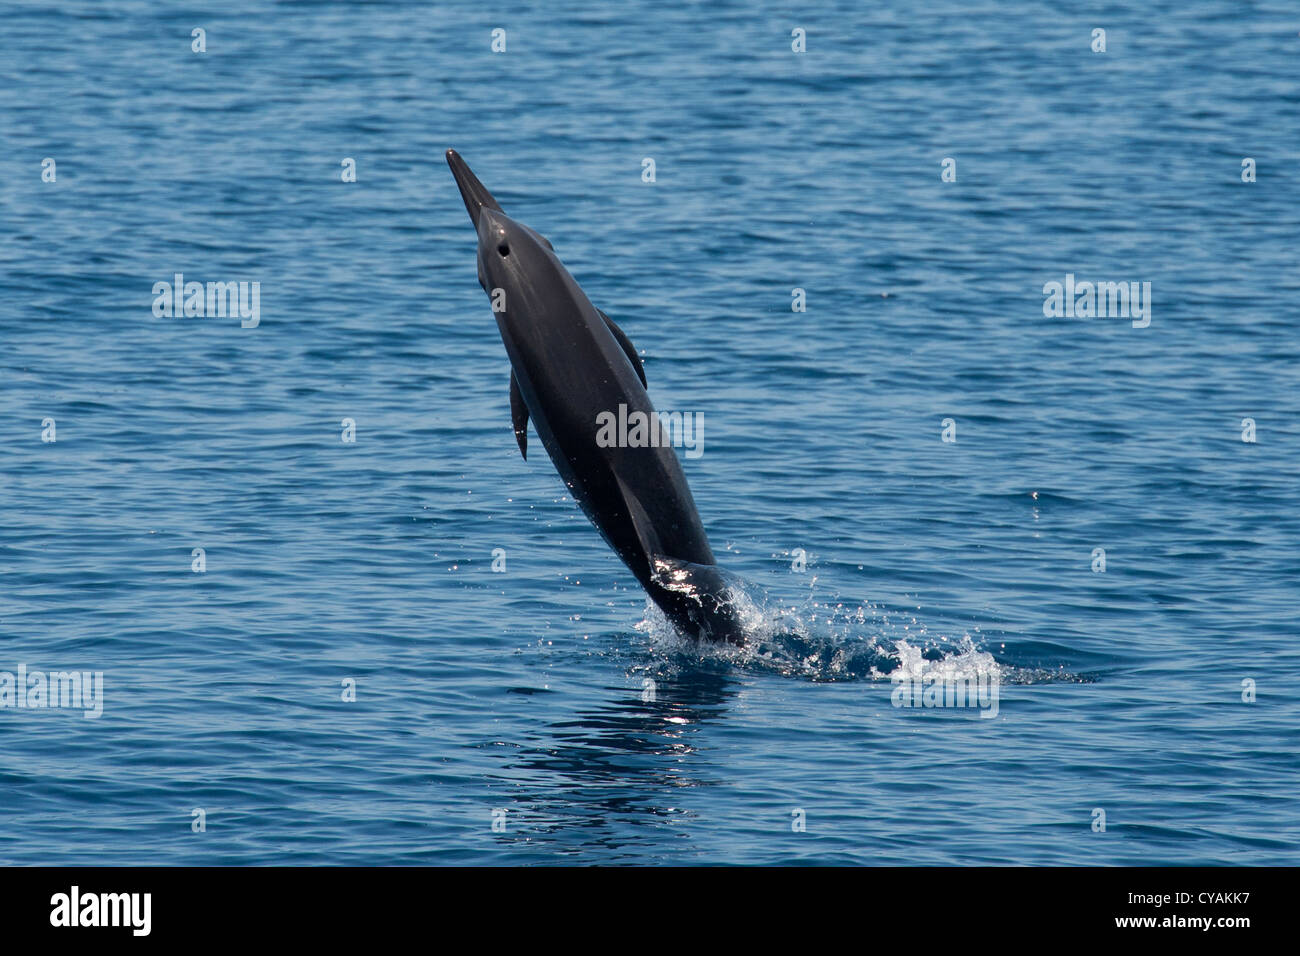 Hawaiian/grises, Delfines, Stenella longirostris, spinning, Maldivas, Océano Índico. Foto de stock